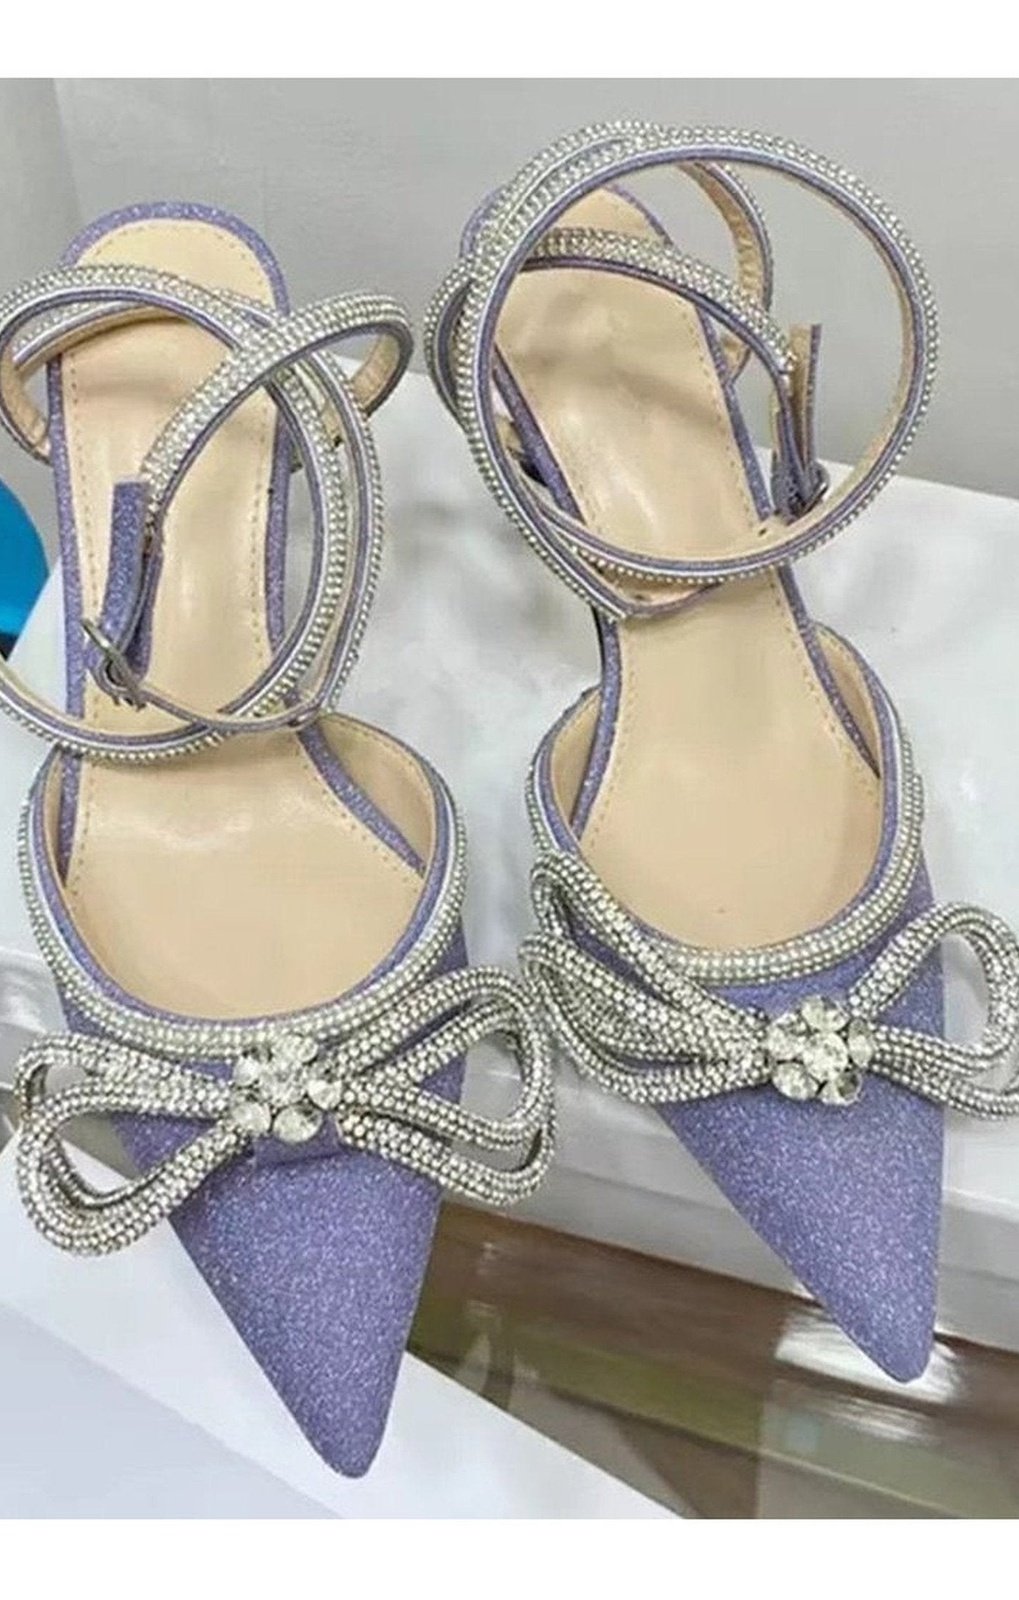 Pointed toe rhinestone bow satin high heels (Many Colors)